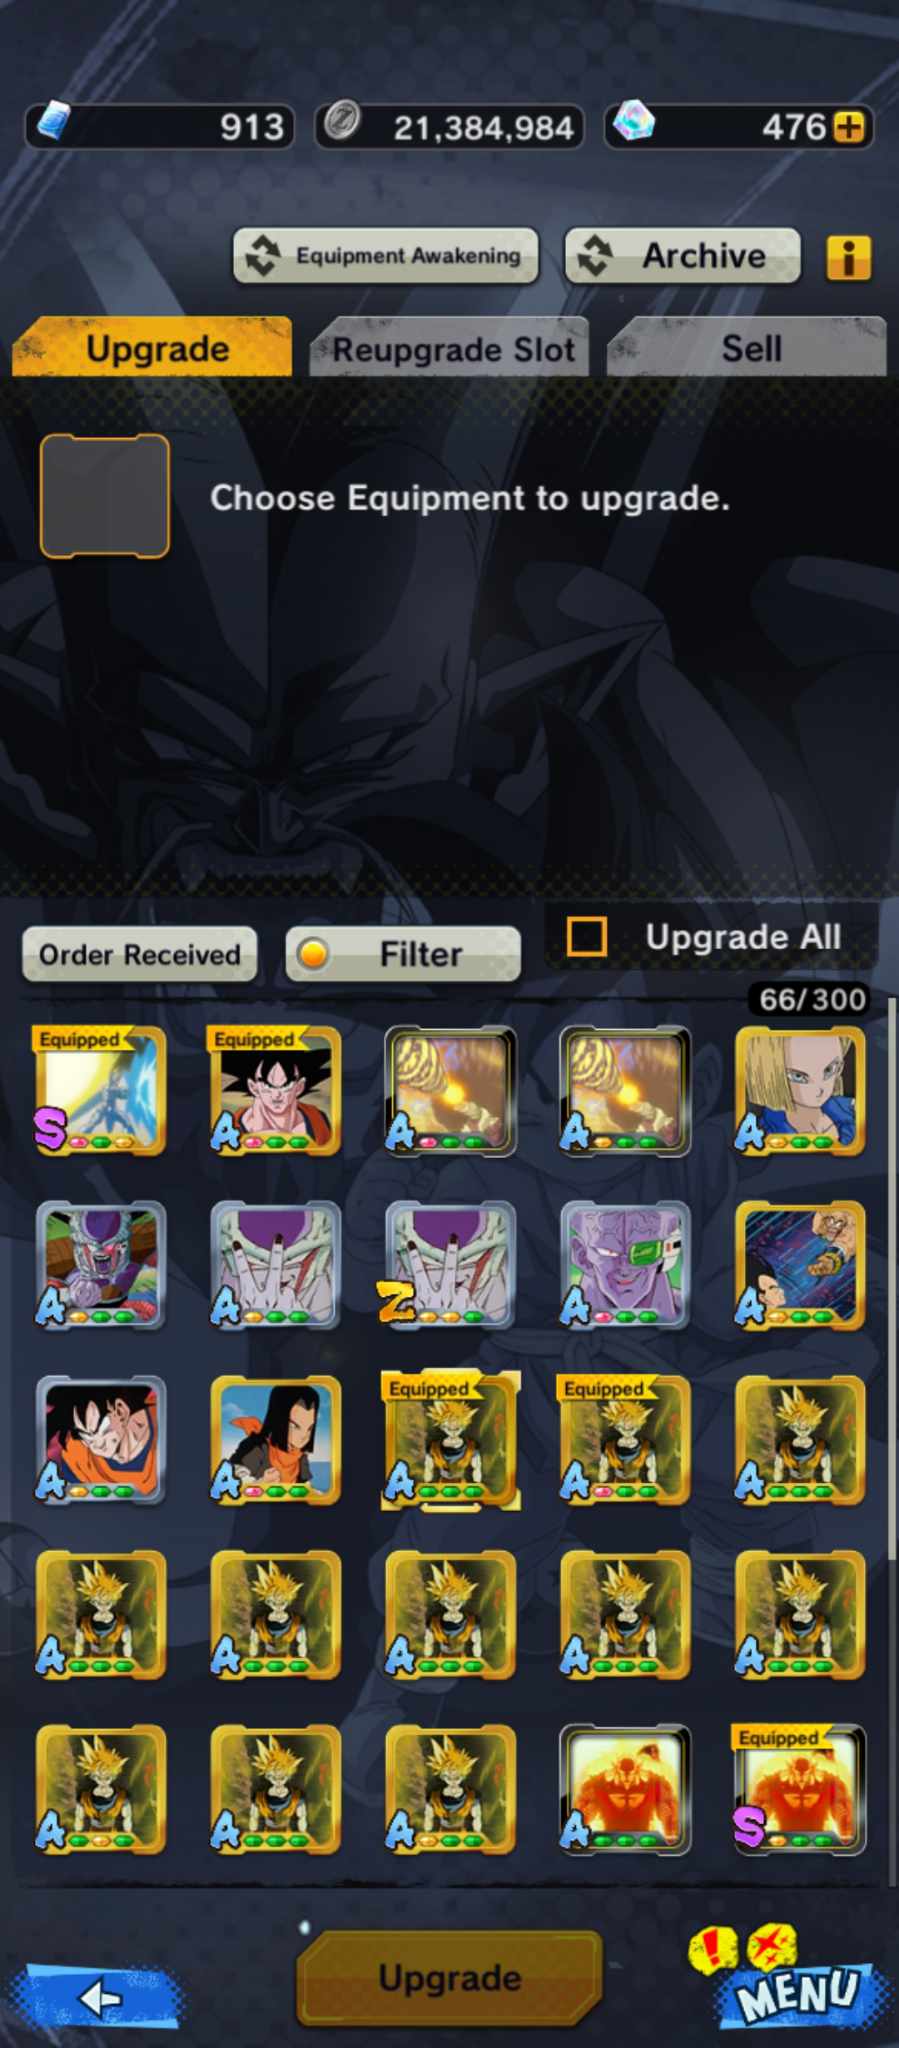 Android + IOS, login Bandai, - 28 qualificatifs légendaires (Han V2, Goku, Han v1, Goku - kid, kuve, Piccolo,...)